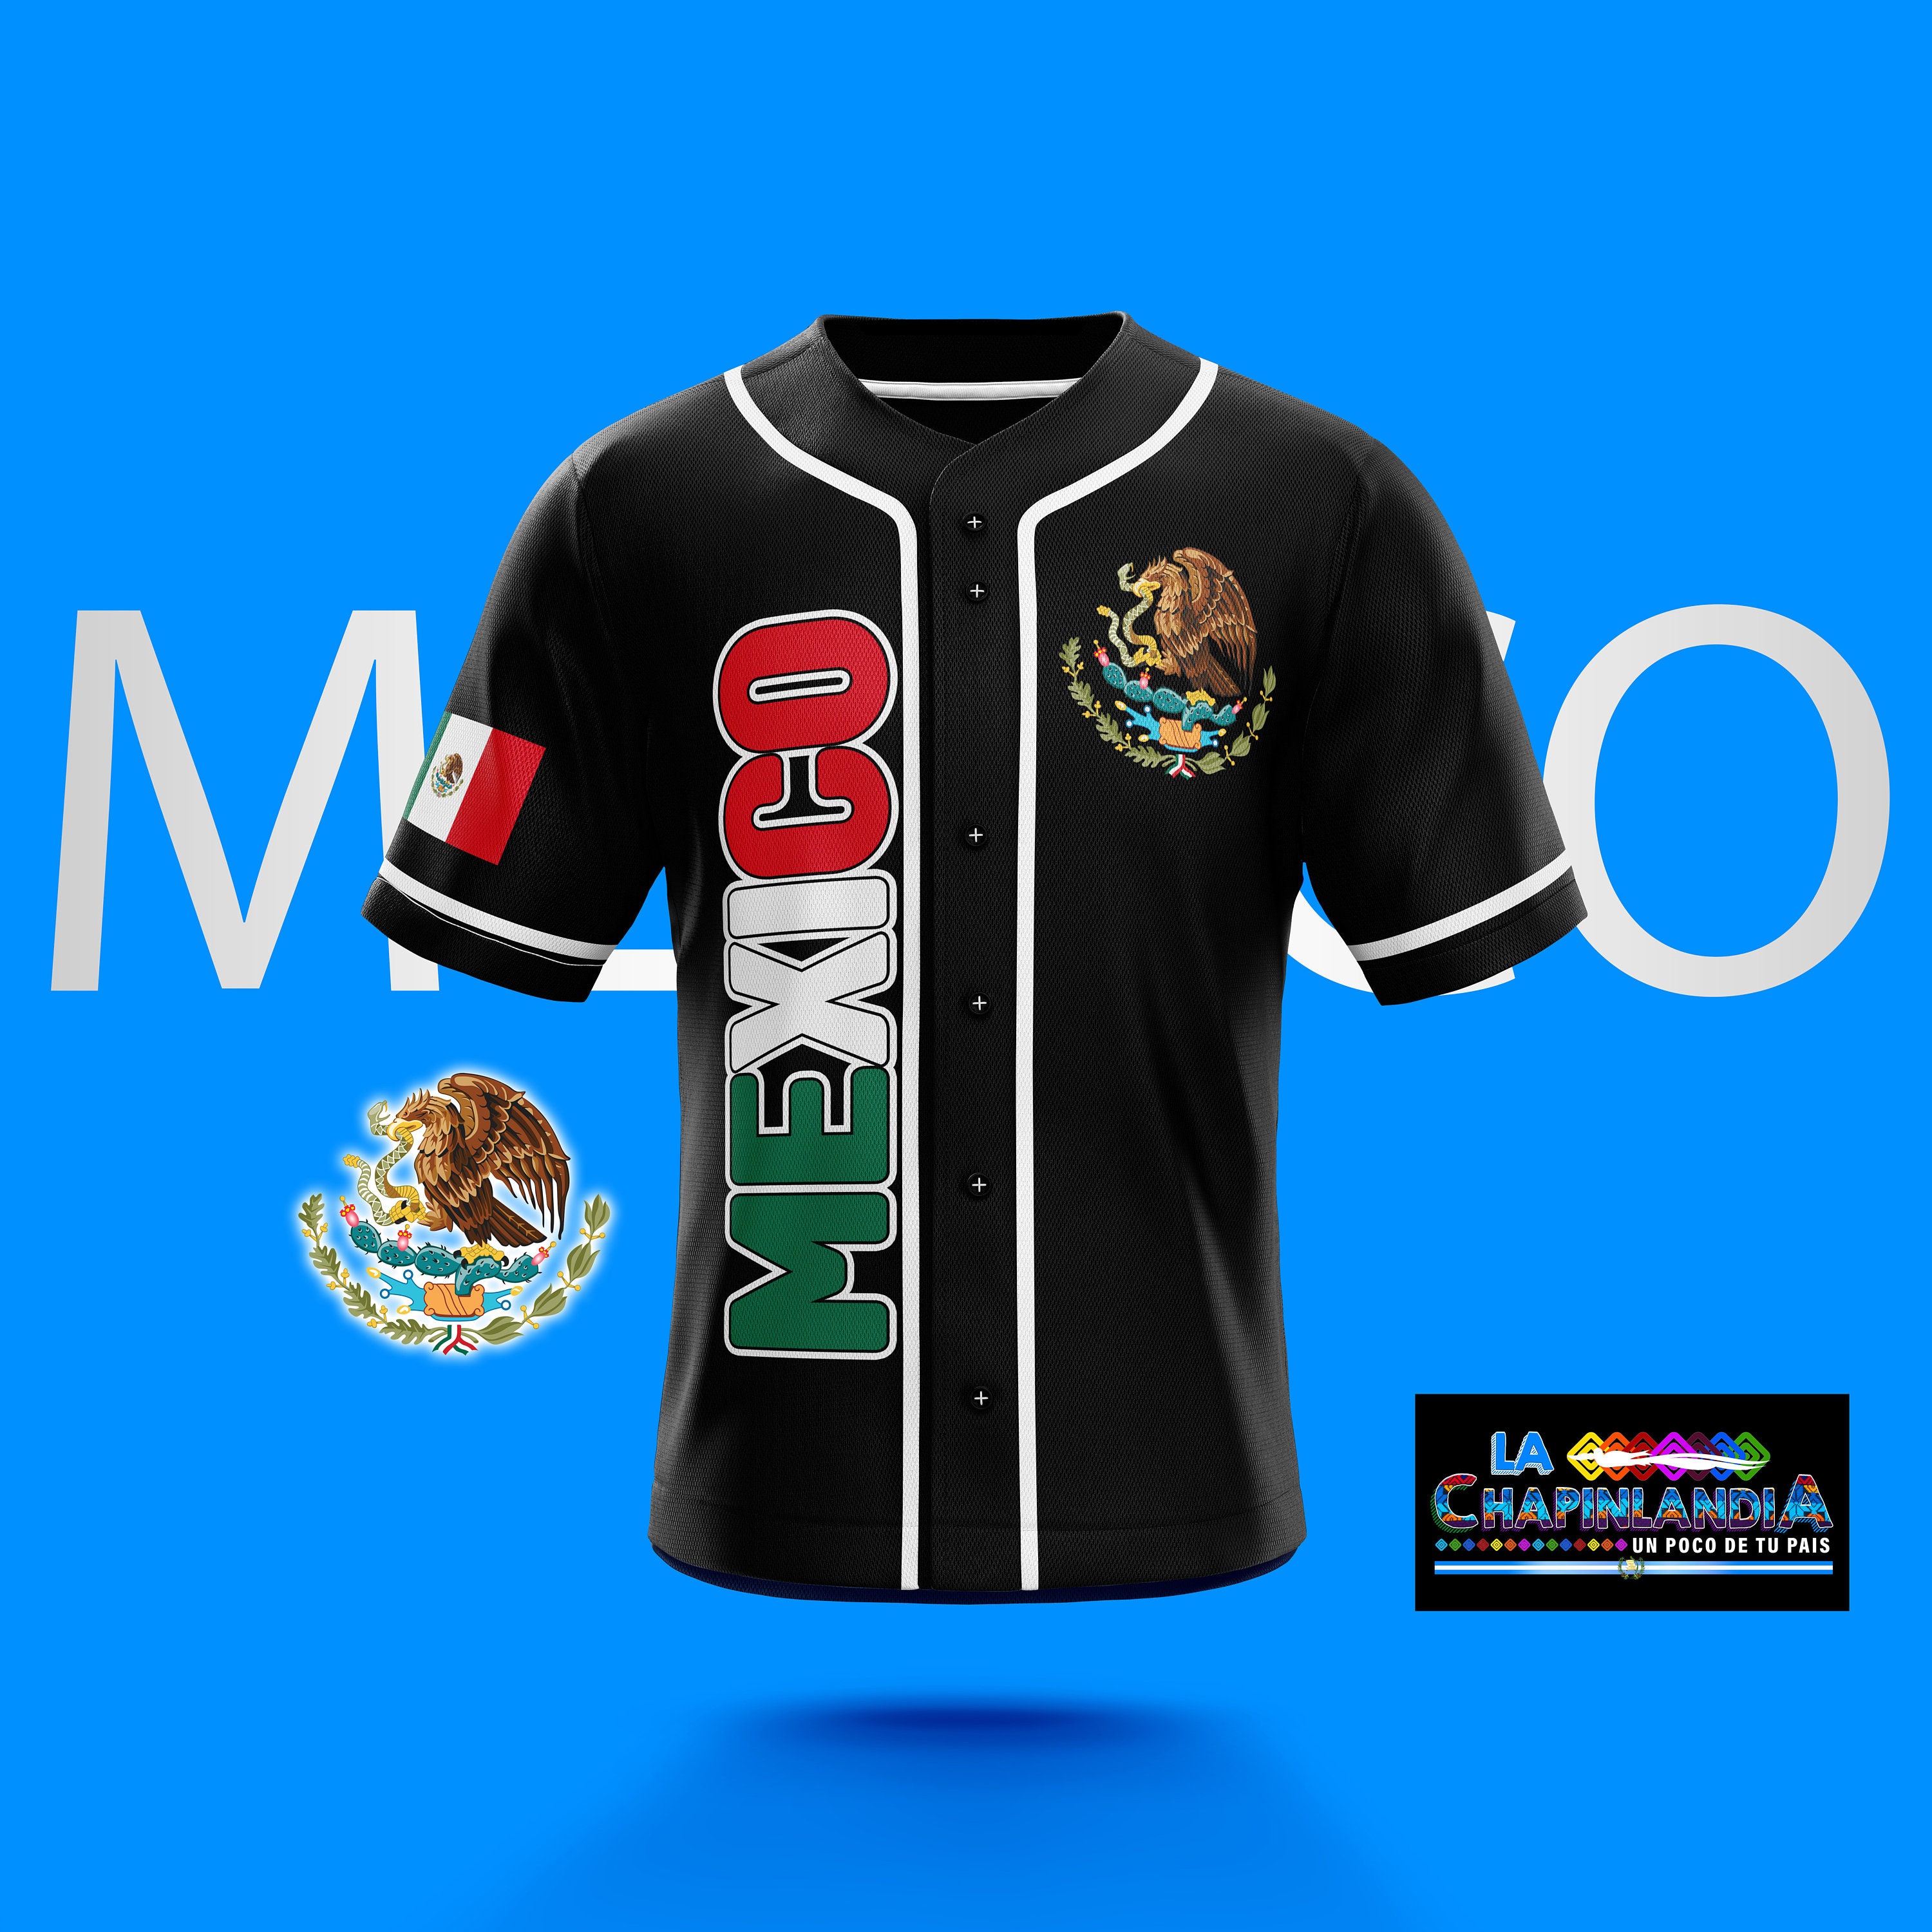 Peso Pluma Los Angeles Dodgers Mexico Flag Baseball Jersey -   Worldwide Shipping